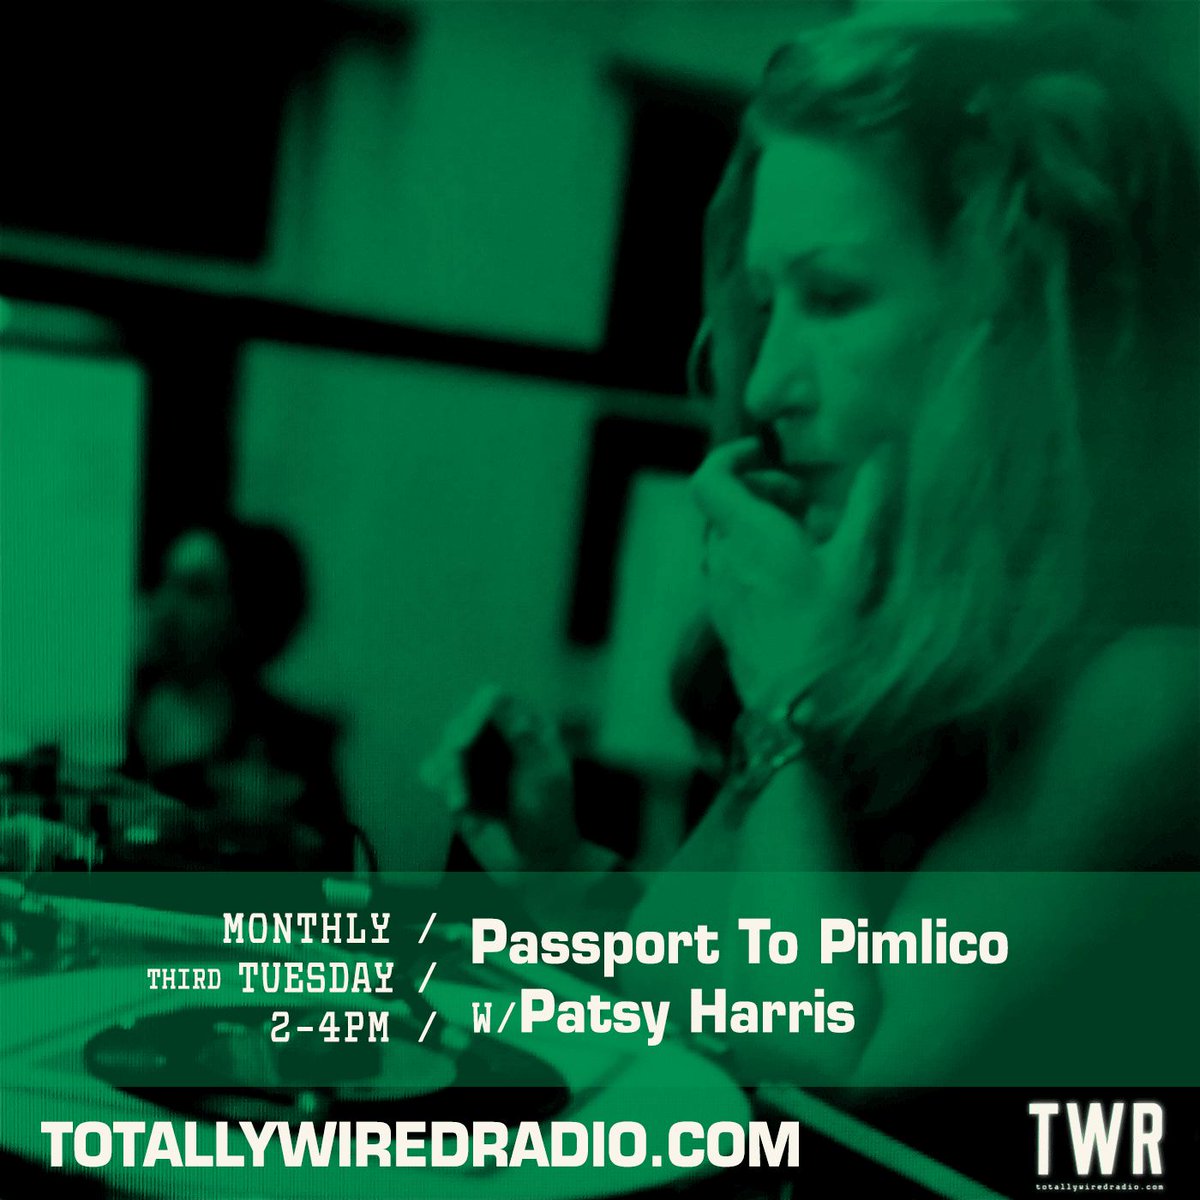 Passport To Pimlico #live w/ Patsy Harris & Erika Ts #startingsoon on #TotallyWiredRadio Listen @ Link in bio. - #MusicIsLife #London - #NorthernSoul #Mod #RnB #Funk #Soul